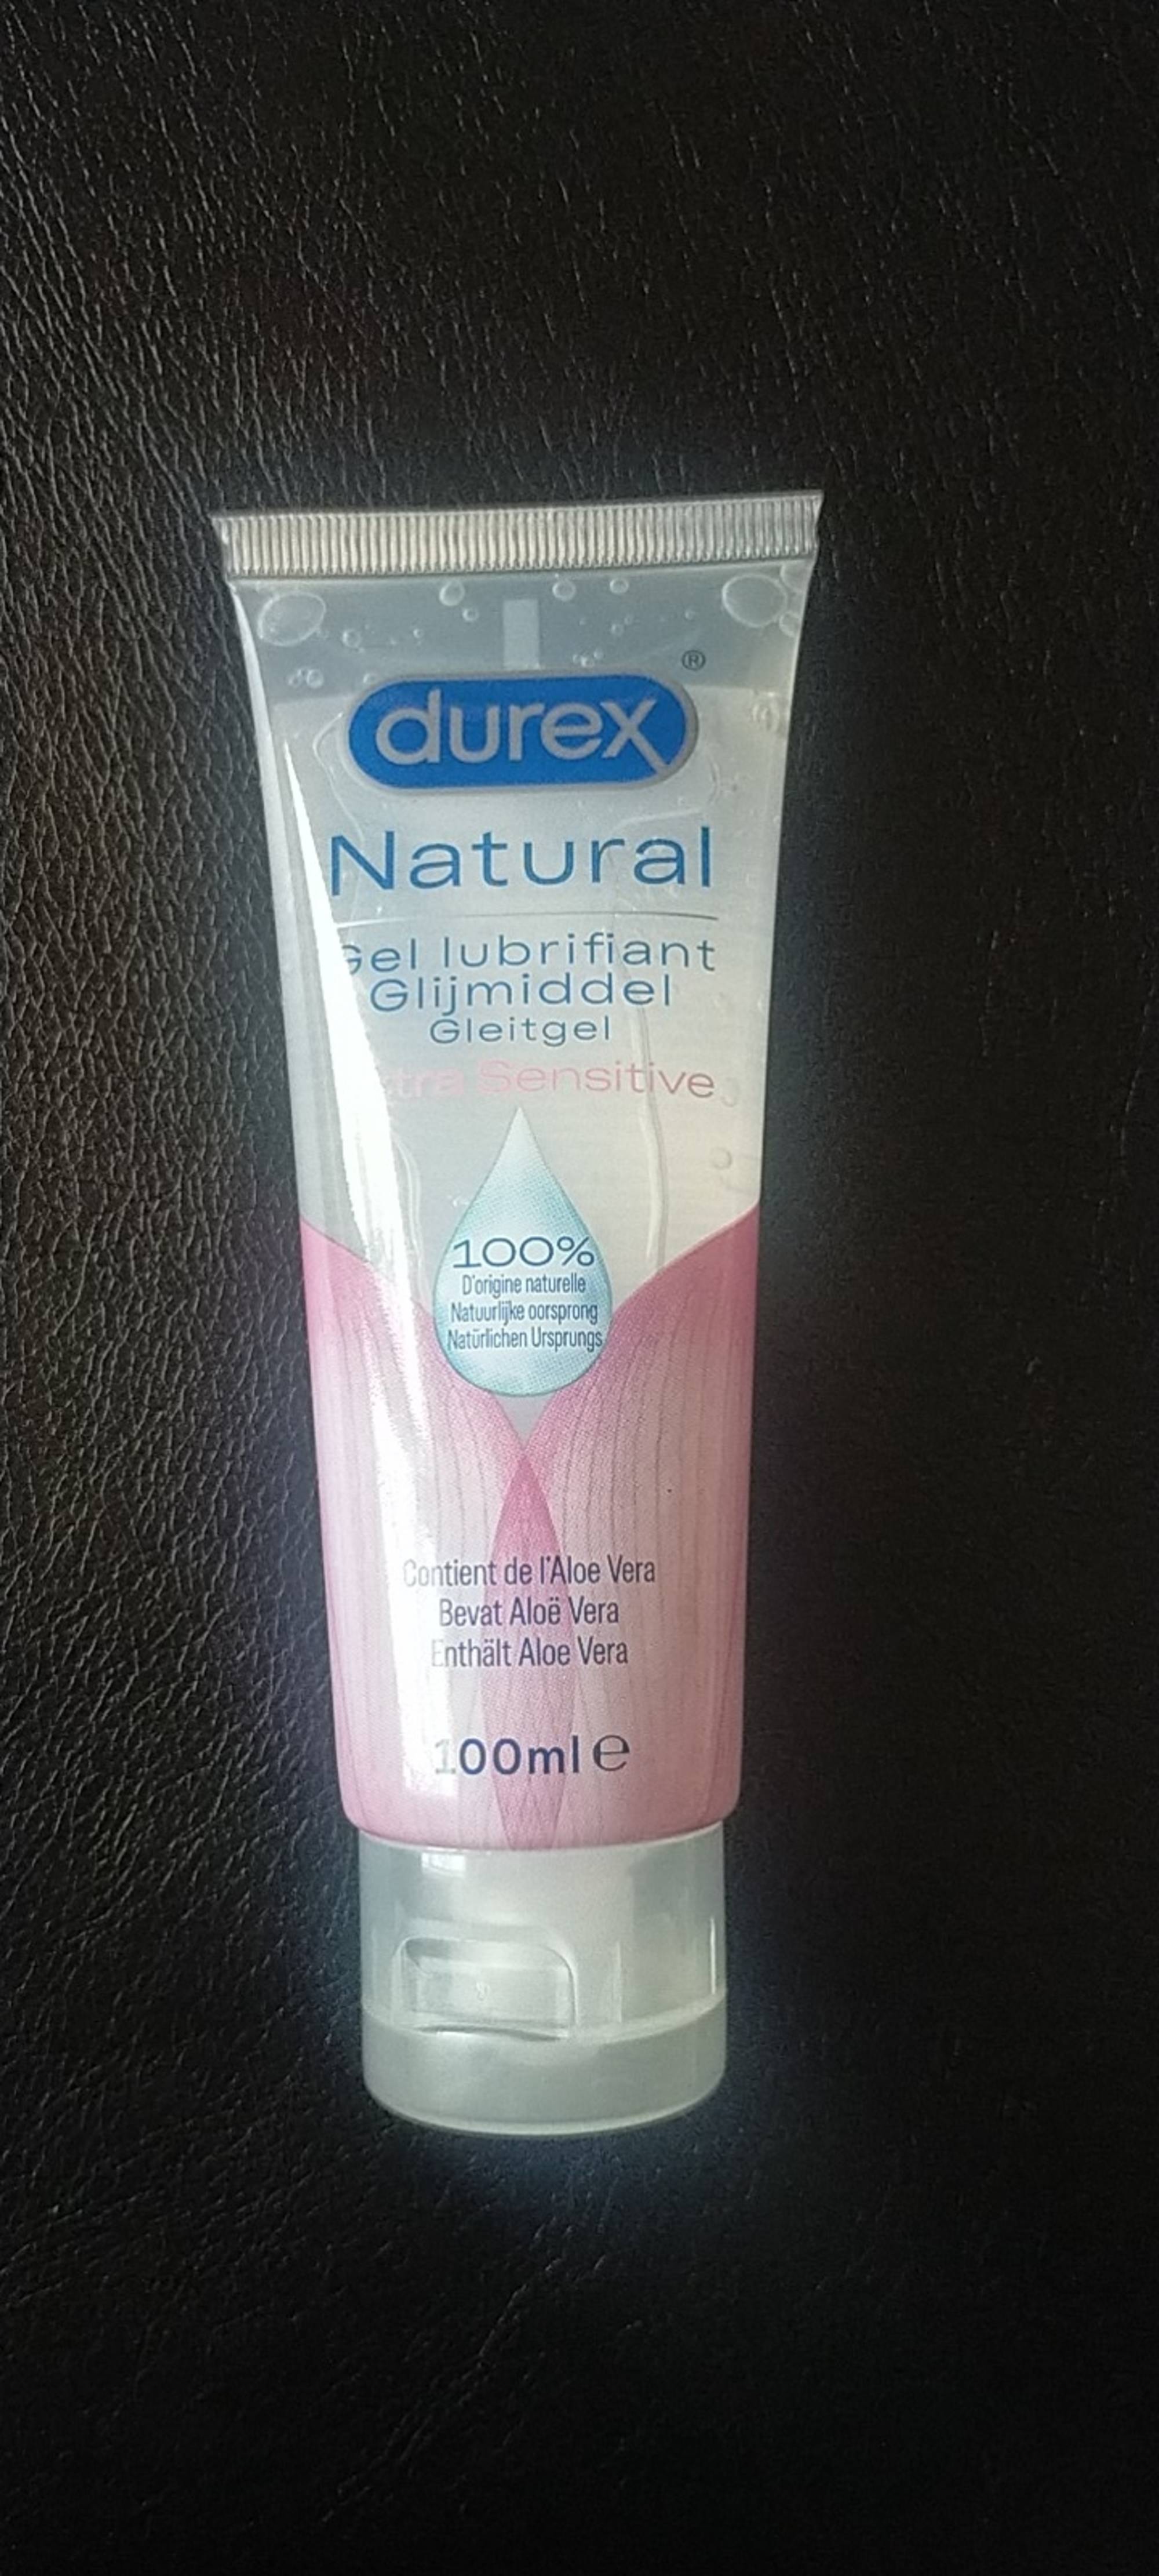 DUREX - Natural - Gel lubrifiant extra sensitive